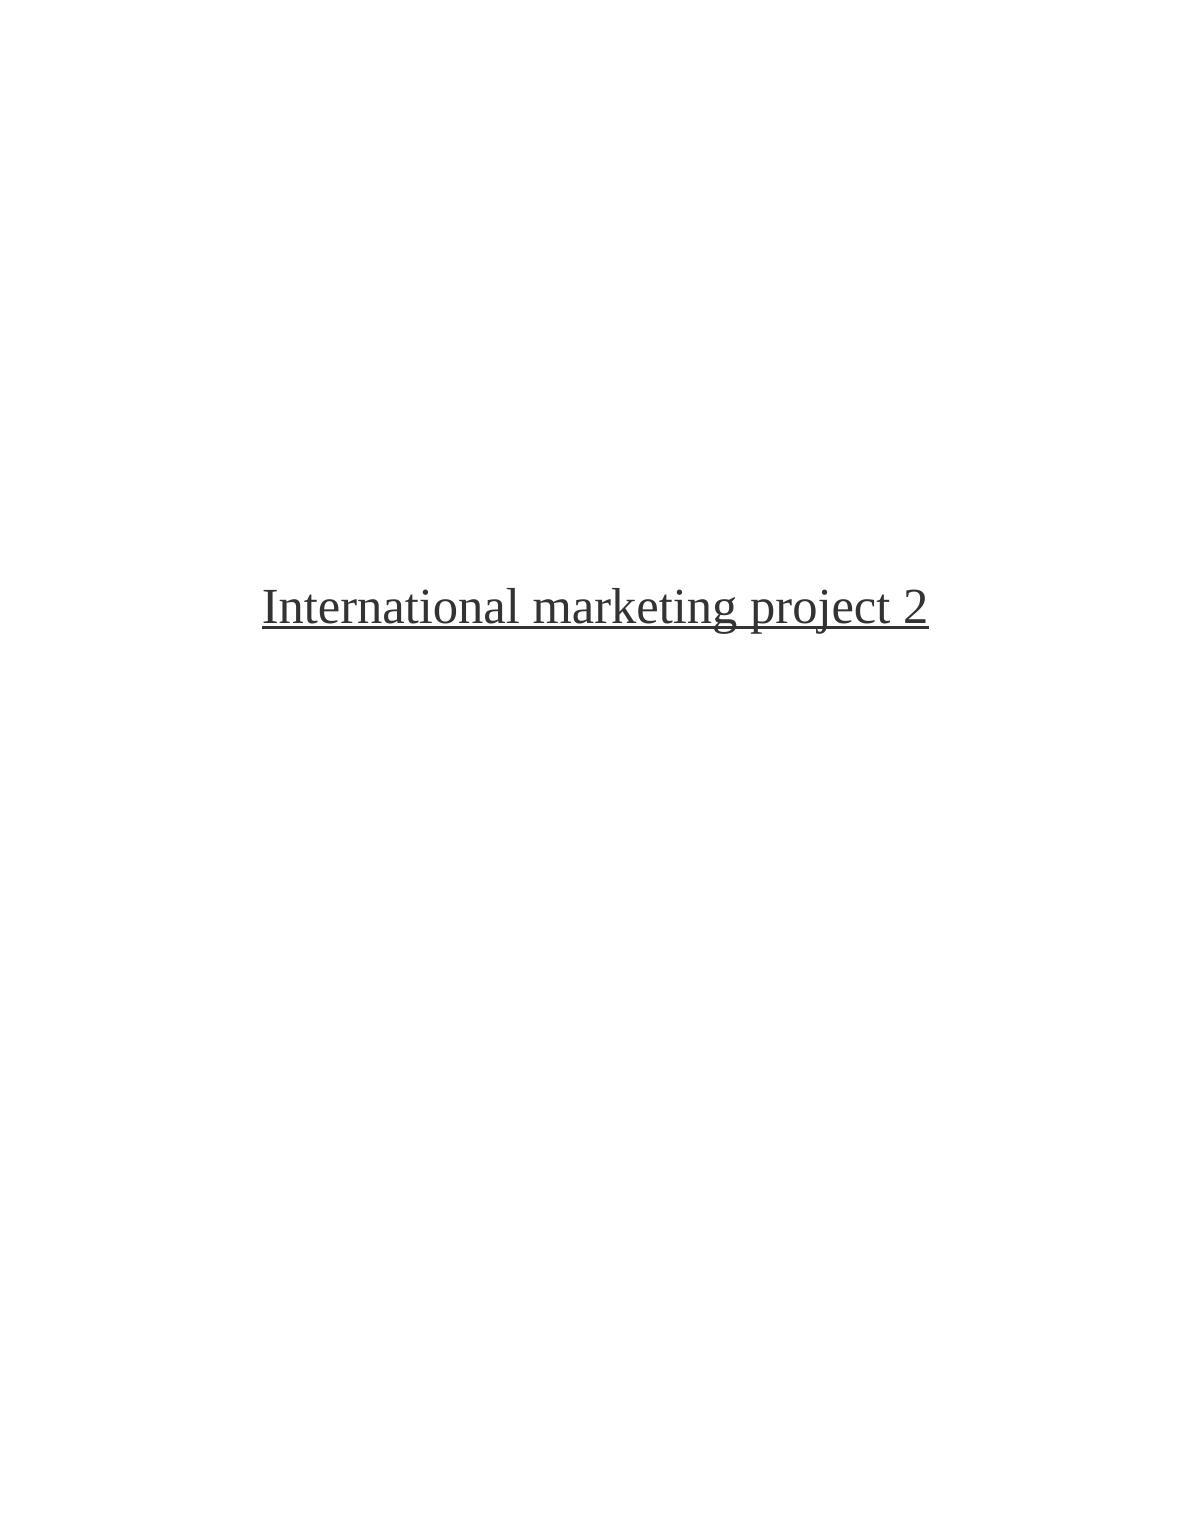 International marketing project - Debenhams_1